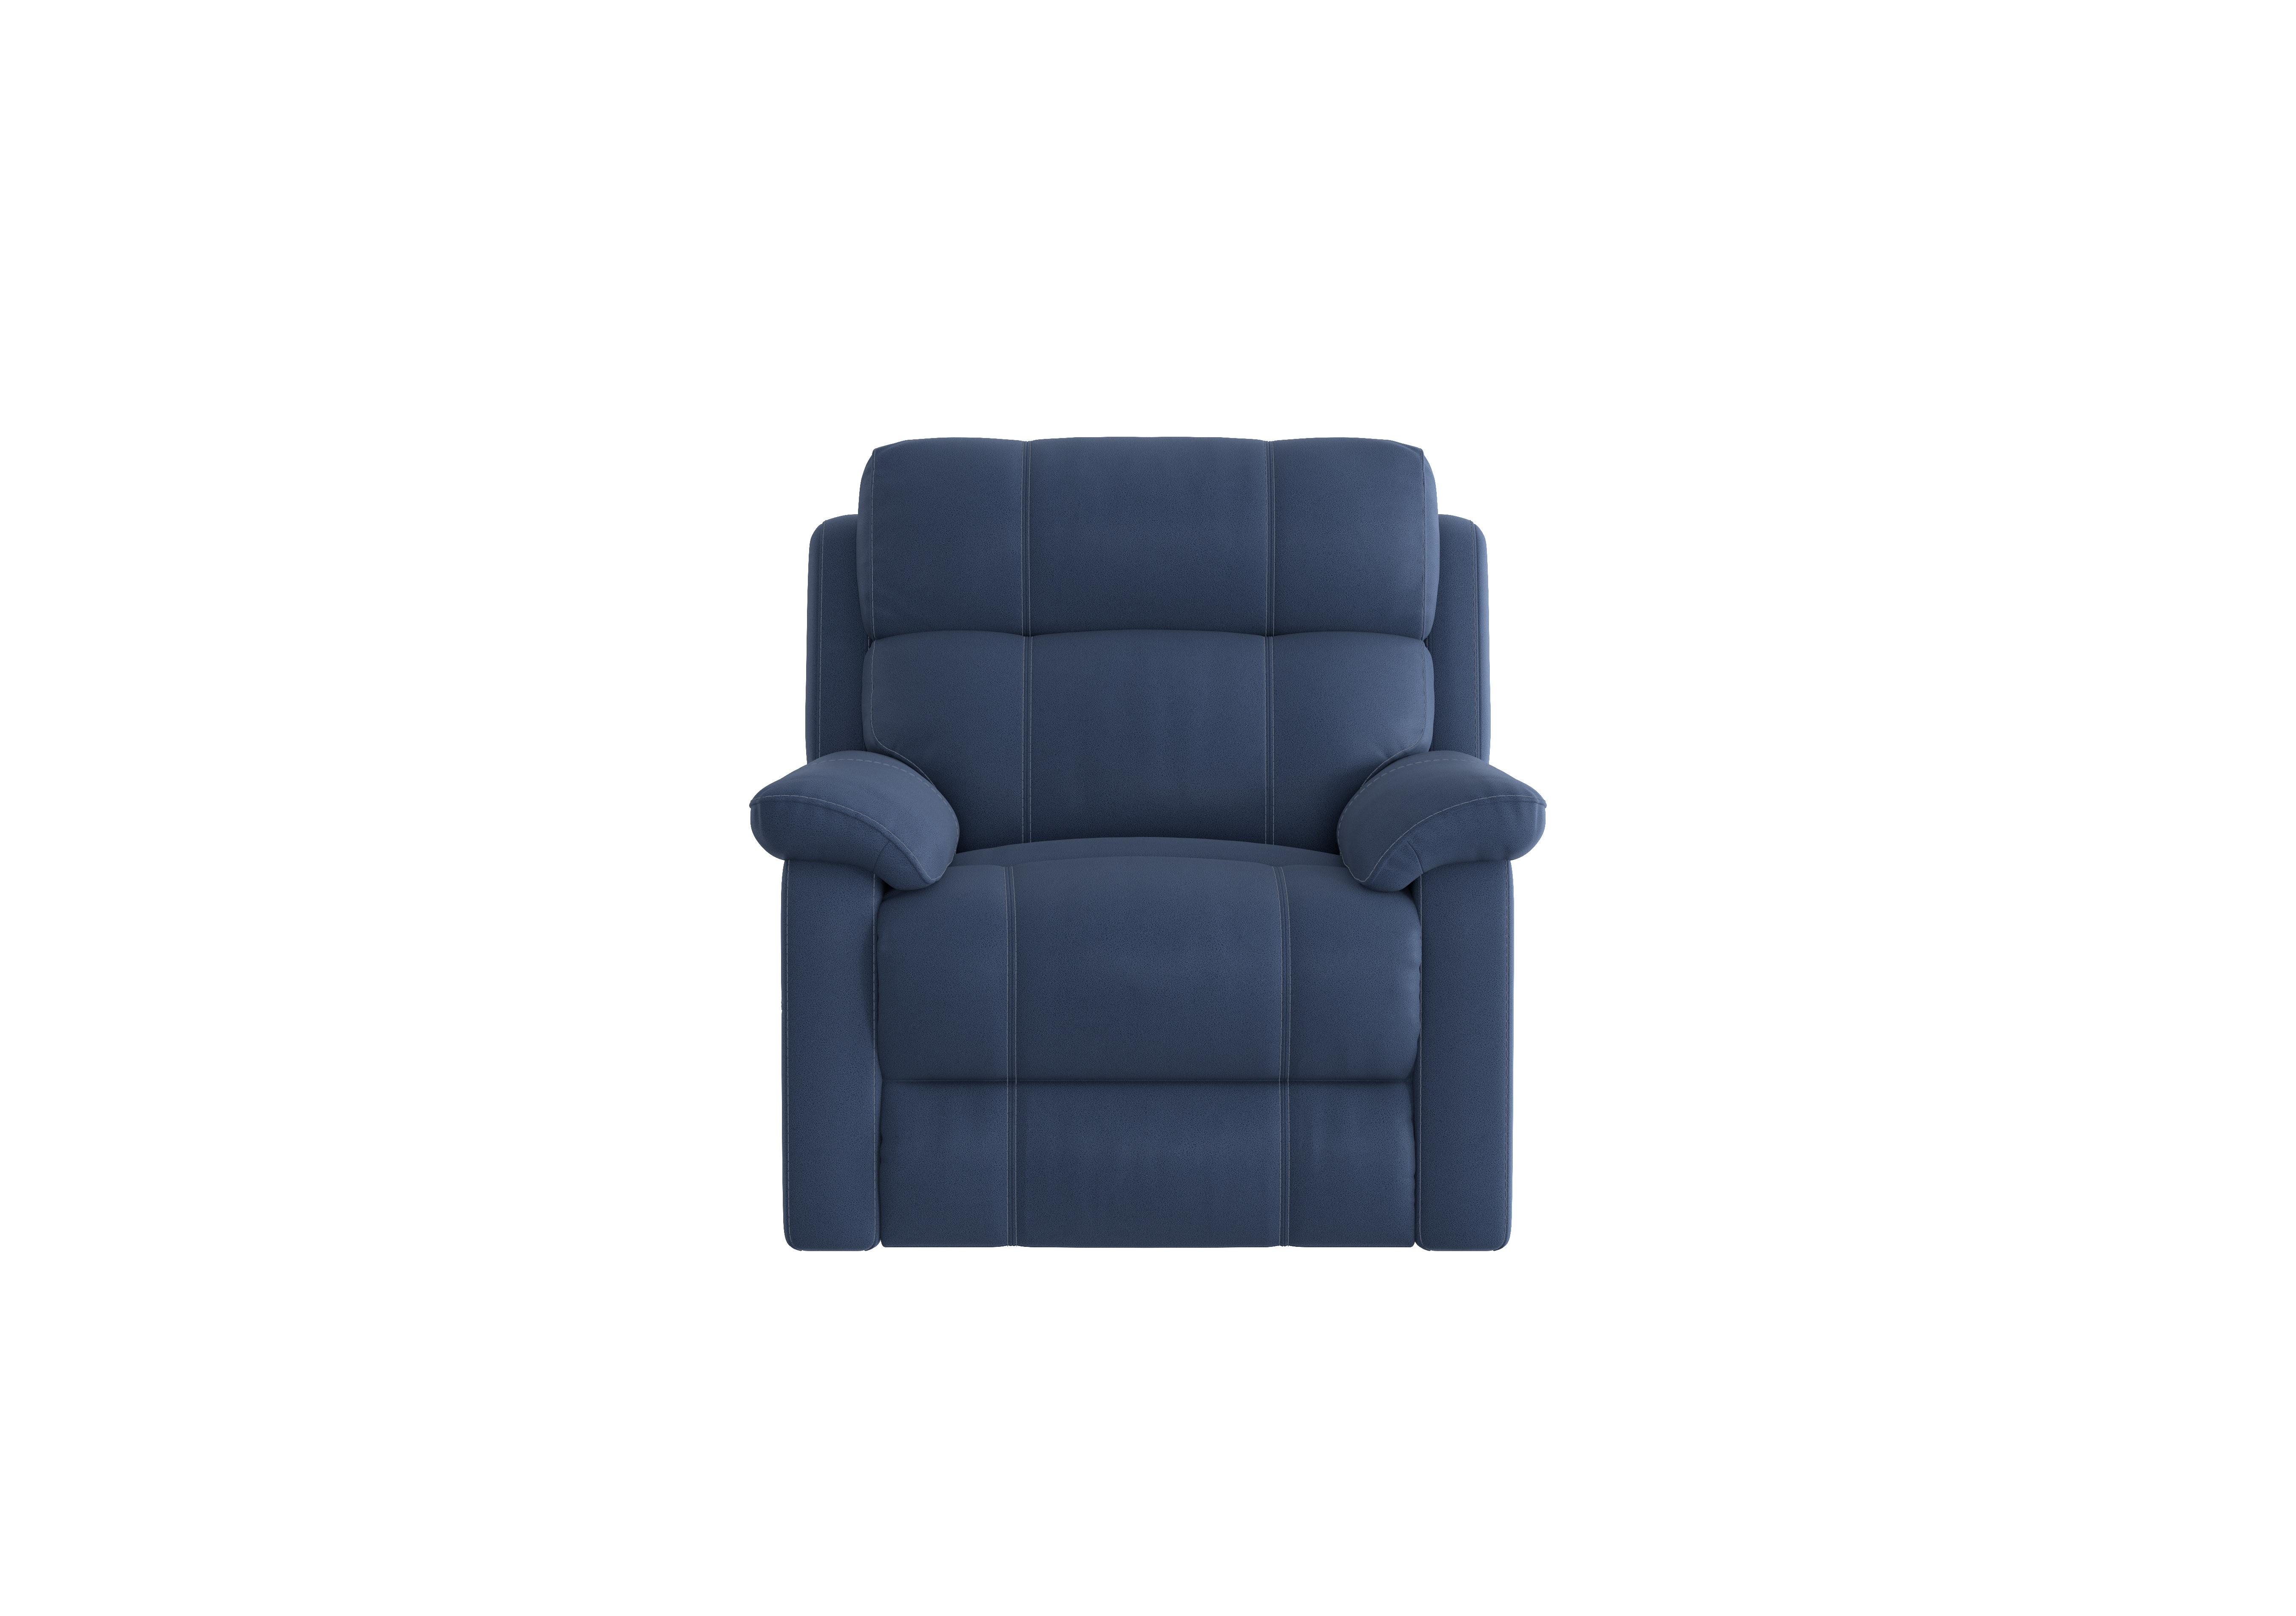 Relax Station Komodo Fabric Recliner Armchair in Bfa-Blj-R10 Blue on Furniture Village